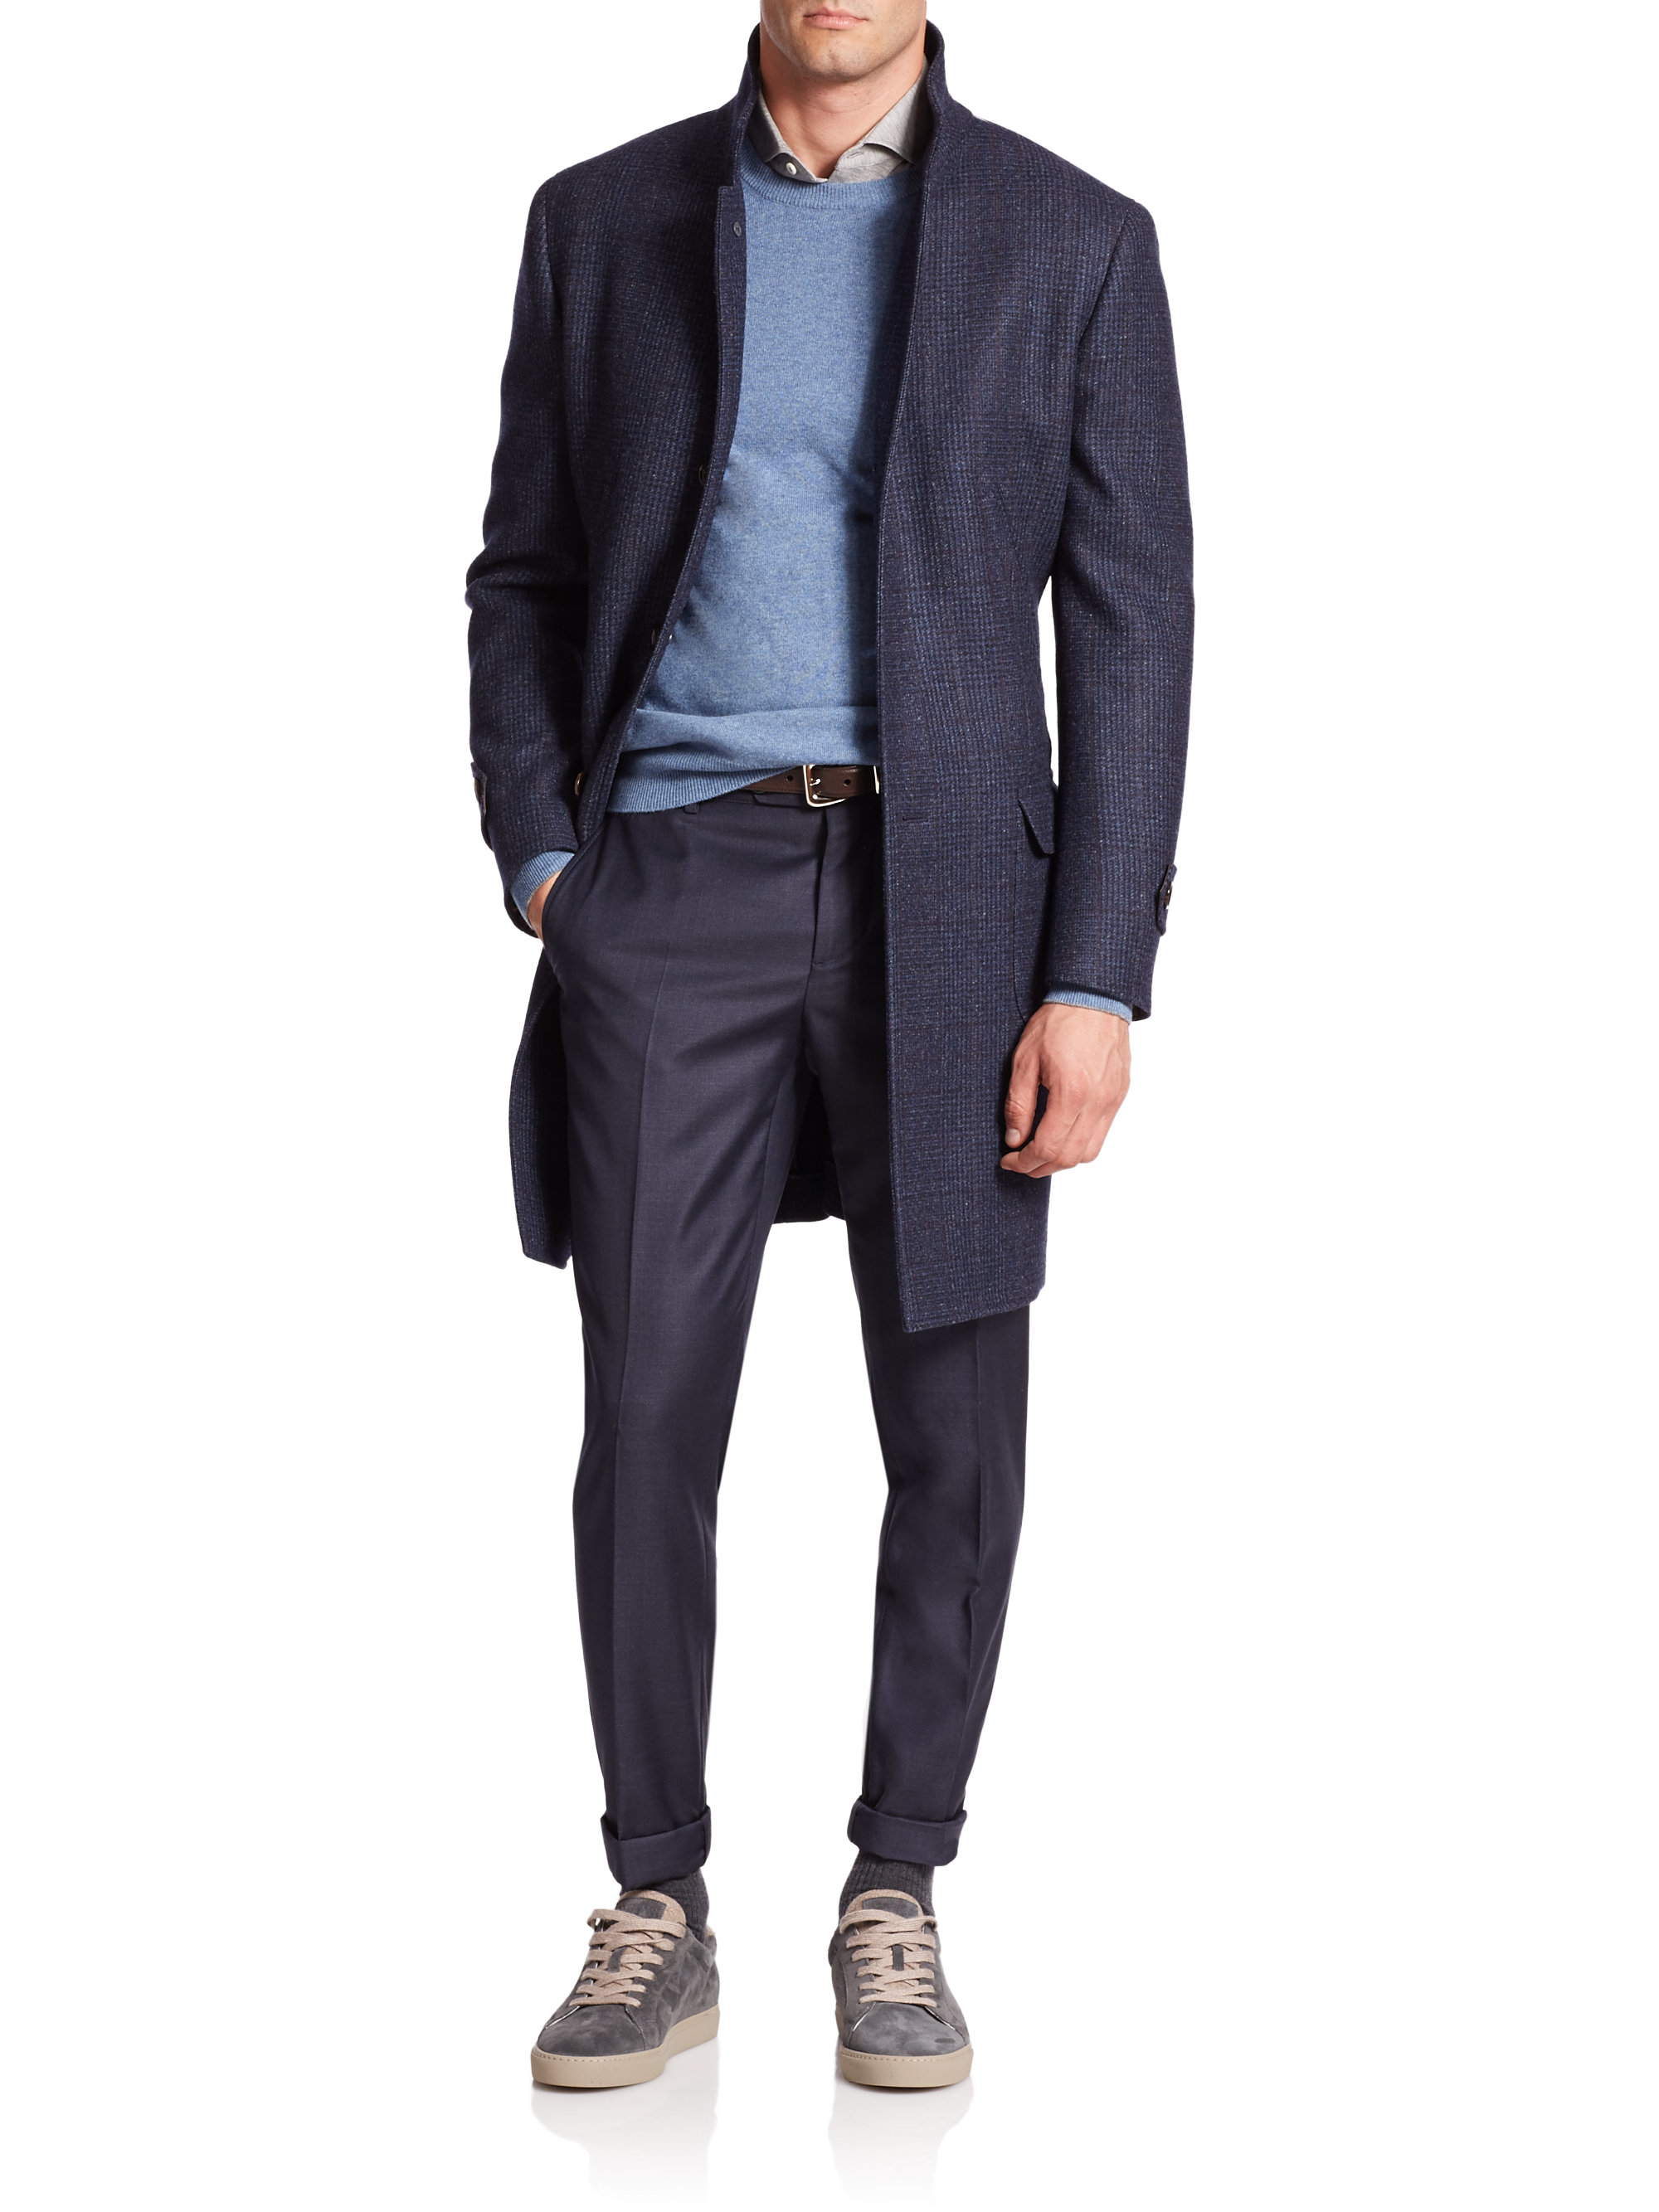 Lyst - Brunello Cucinelli Glen Plaid Wool Overcoat in Blue for Men